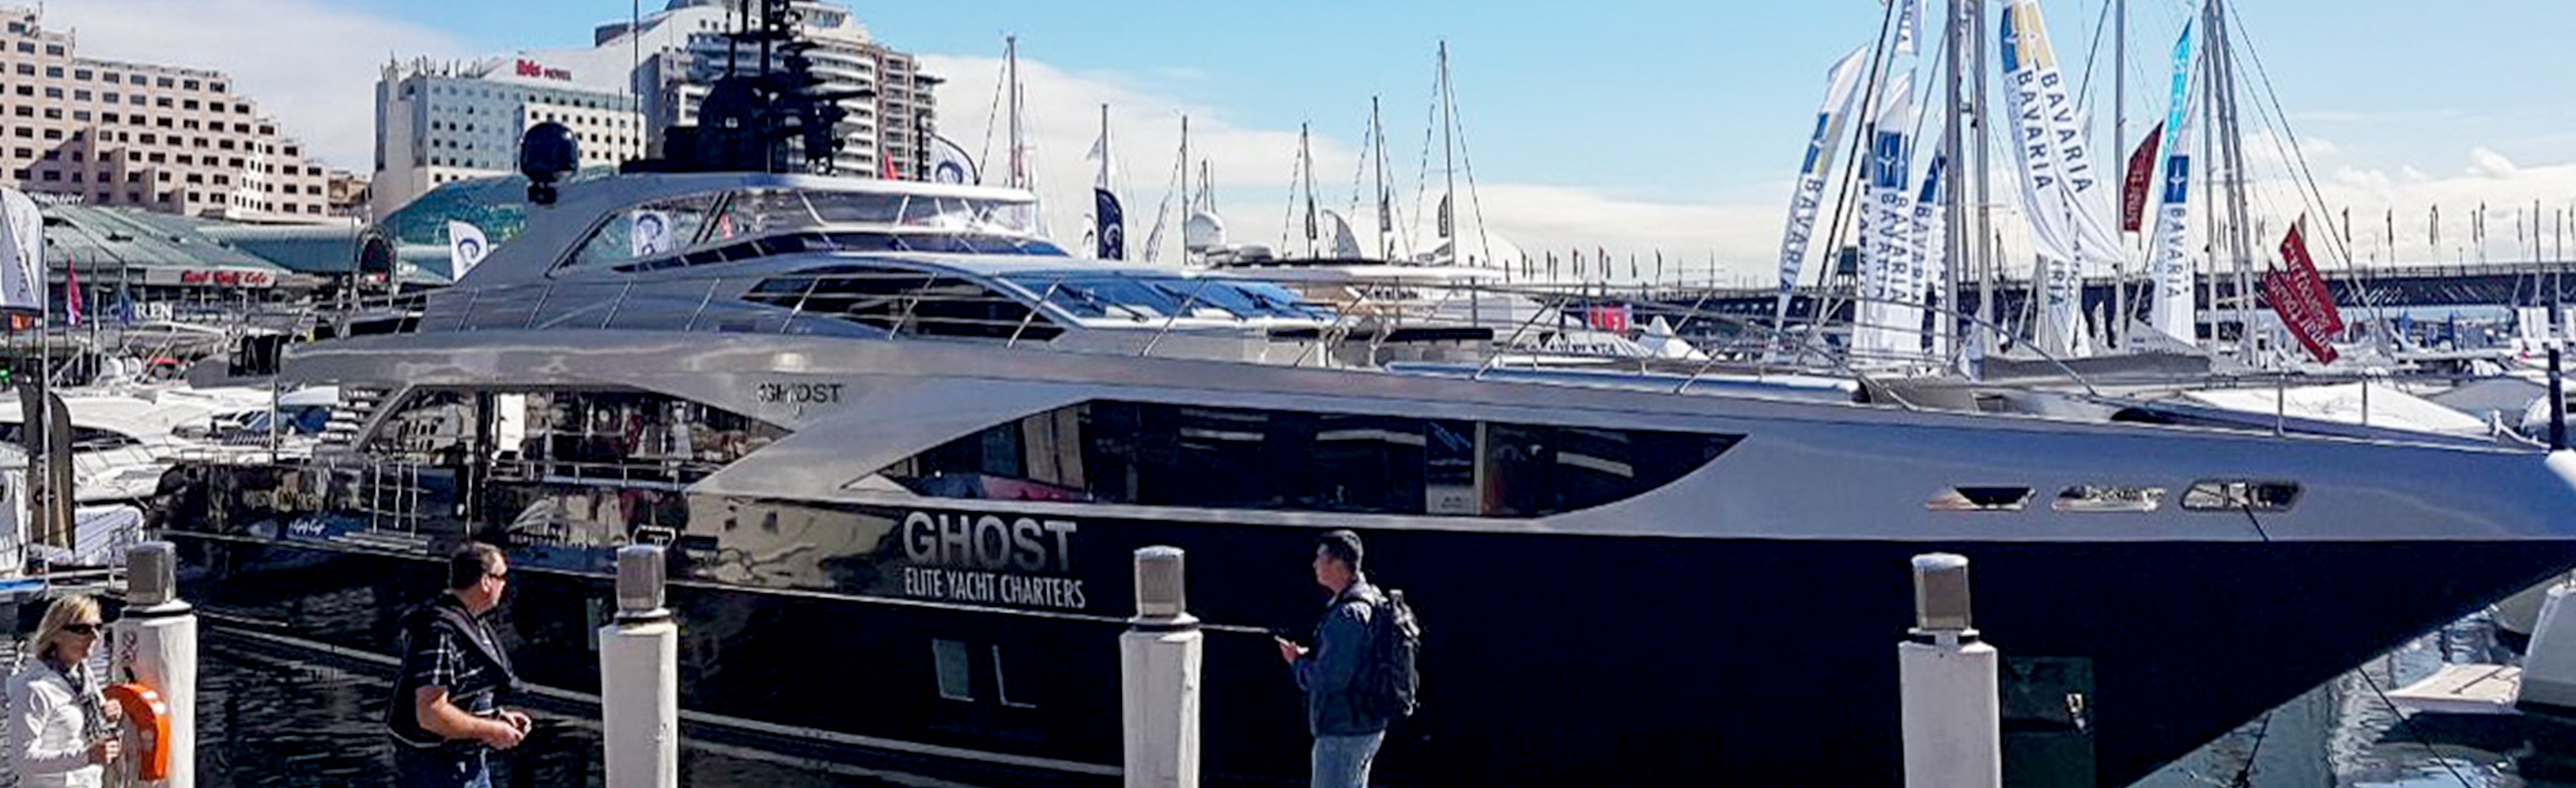 Majesty-122,-Ghost-II,-Sydney-Boat-Show-2017.jpg